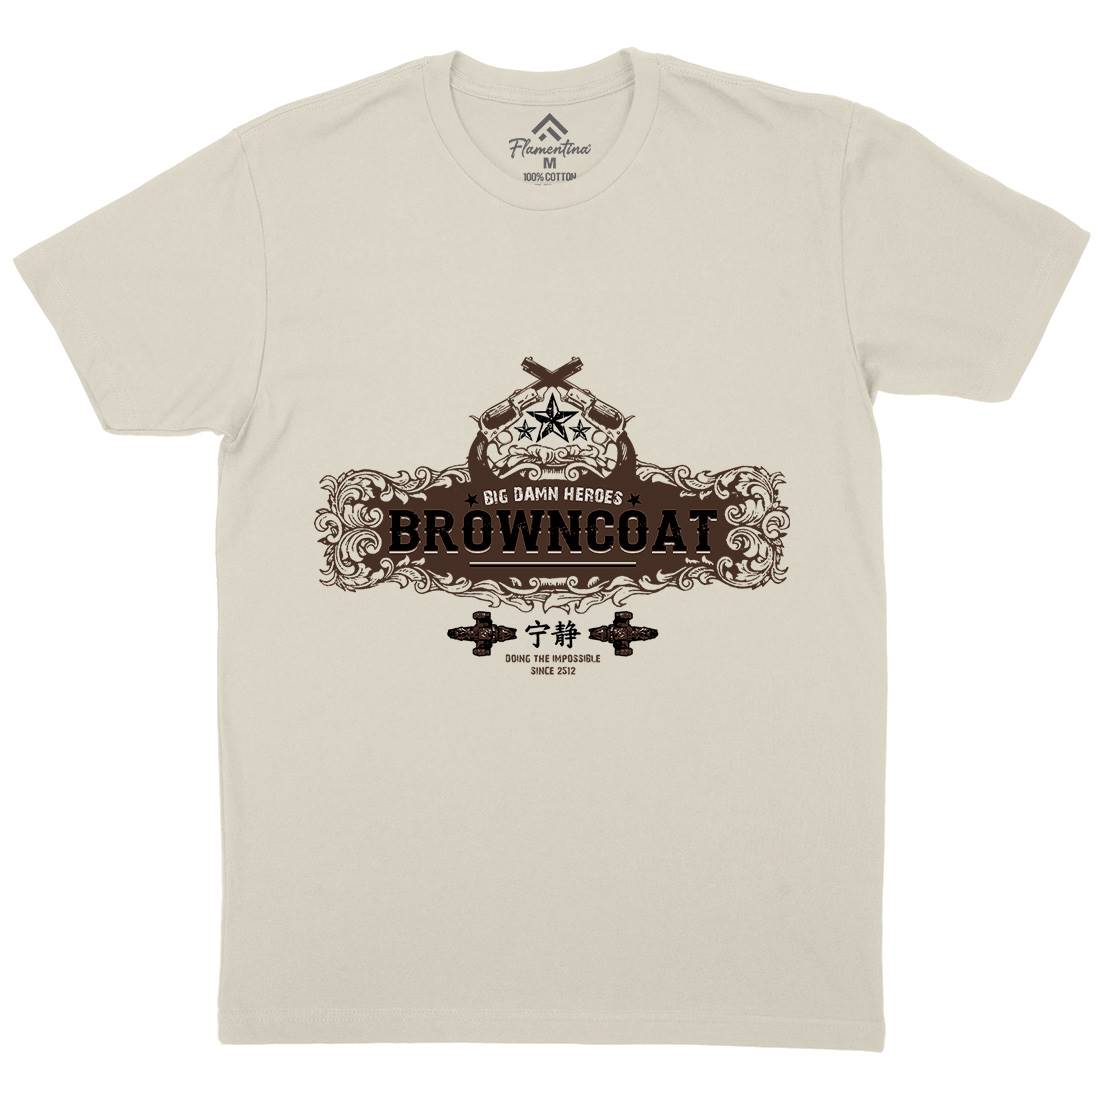 Browncoat Mens Organic Crew Neck T-Shirt Space D350